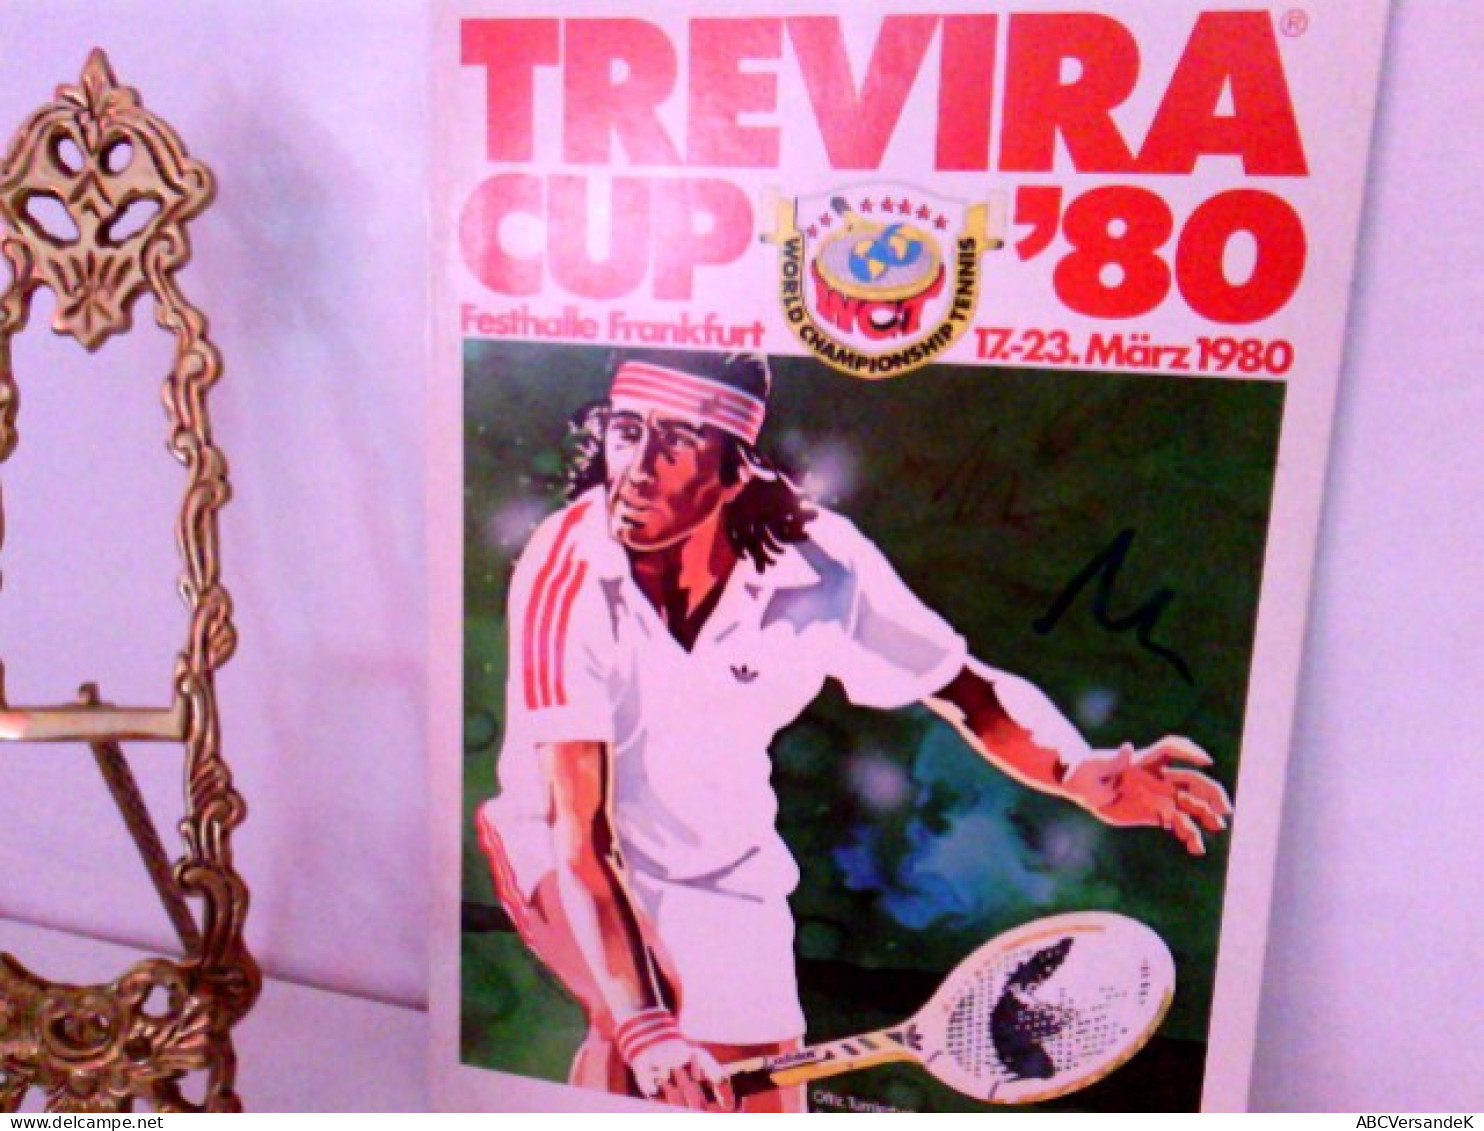 World Championship Tennis - TREVIRA CUP '80 Festhalle Frankfurt 17.- 23. März 1980 - Sports